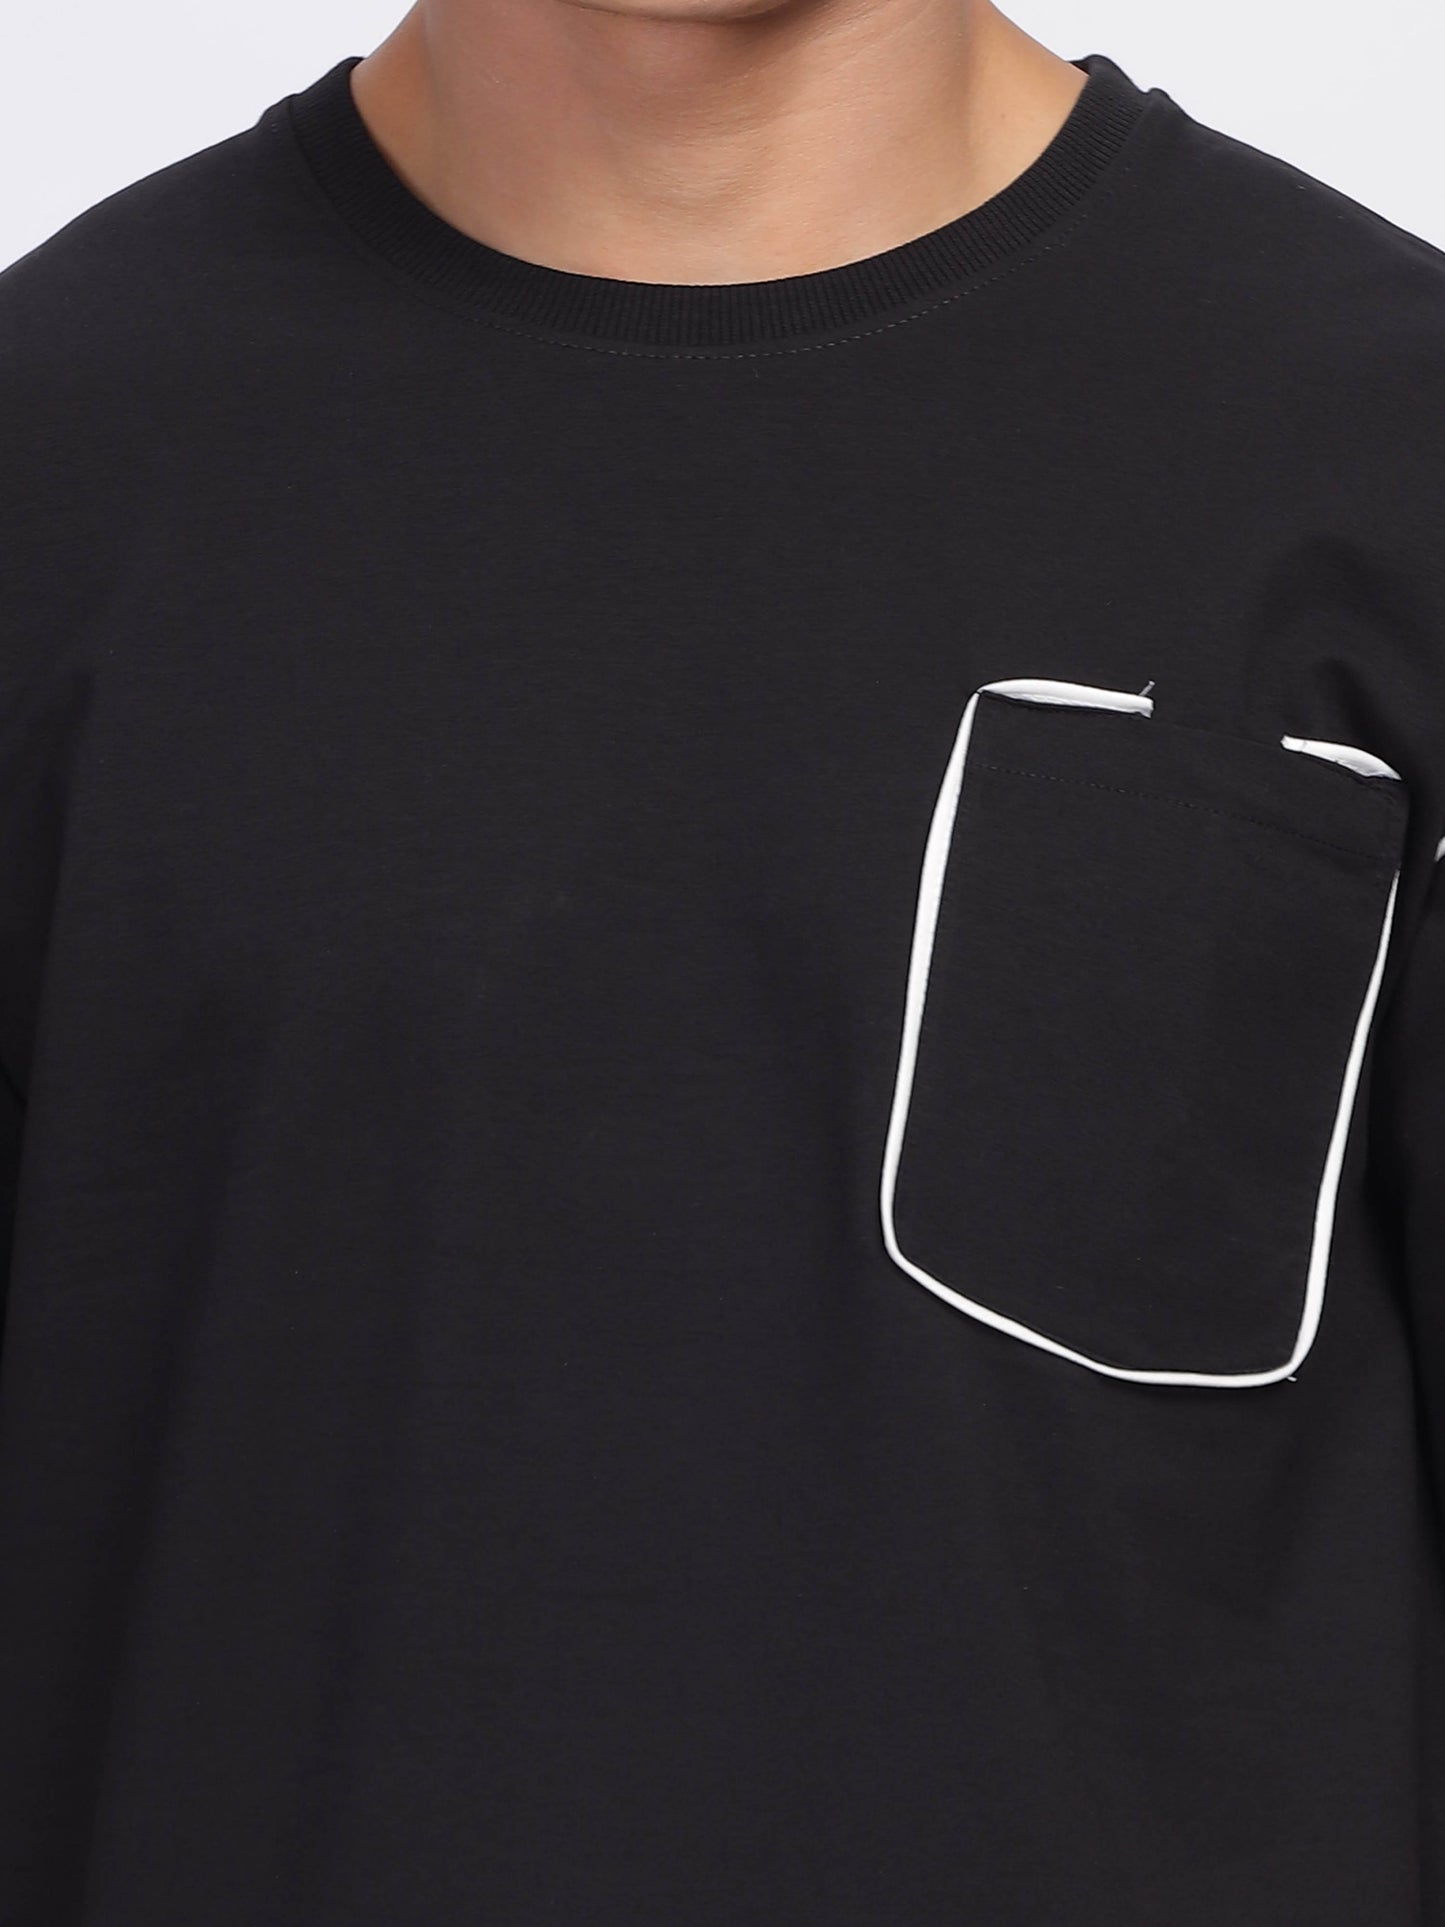 Contrast Stitch Black Drop Shoulder T-Shirt